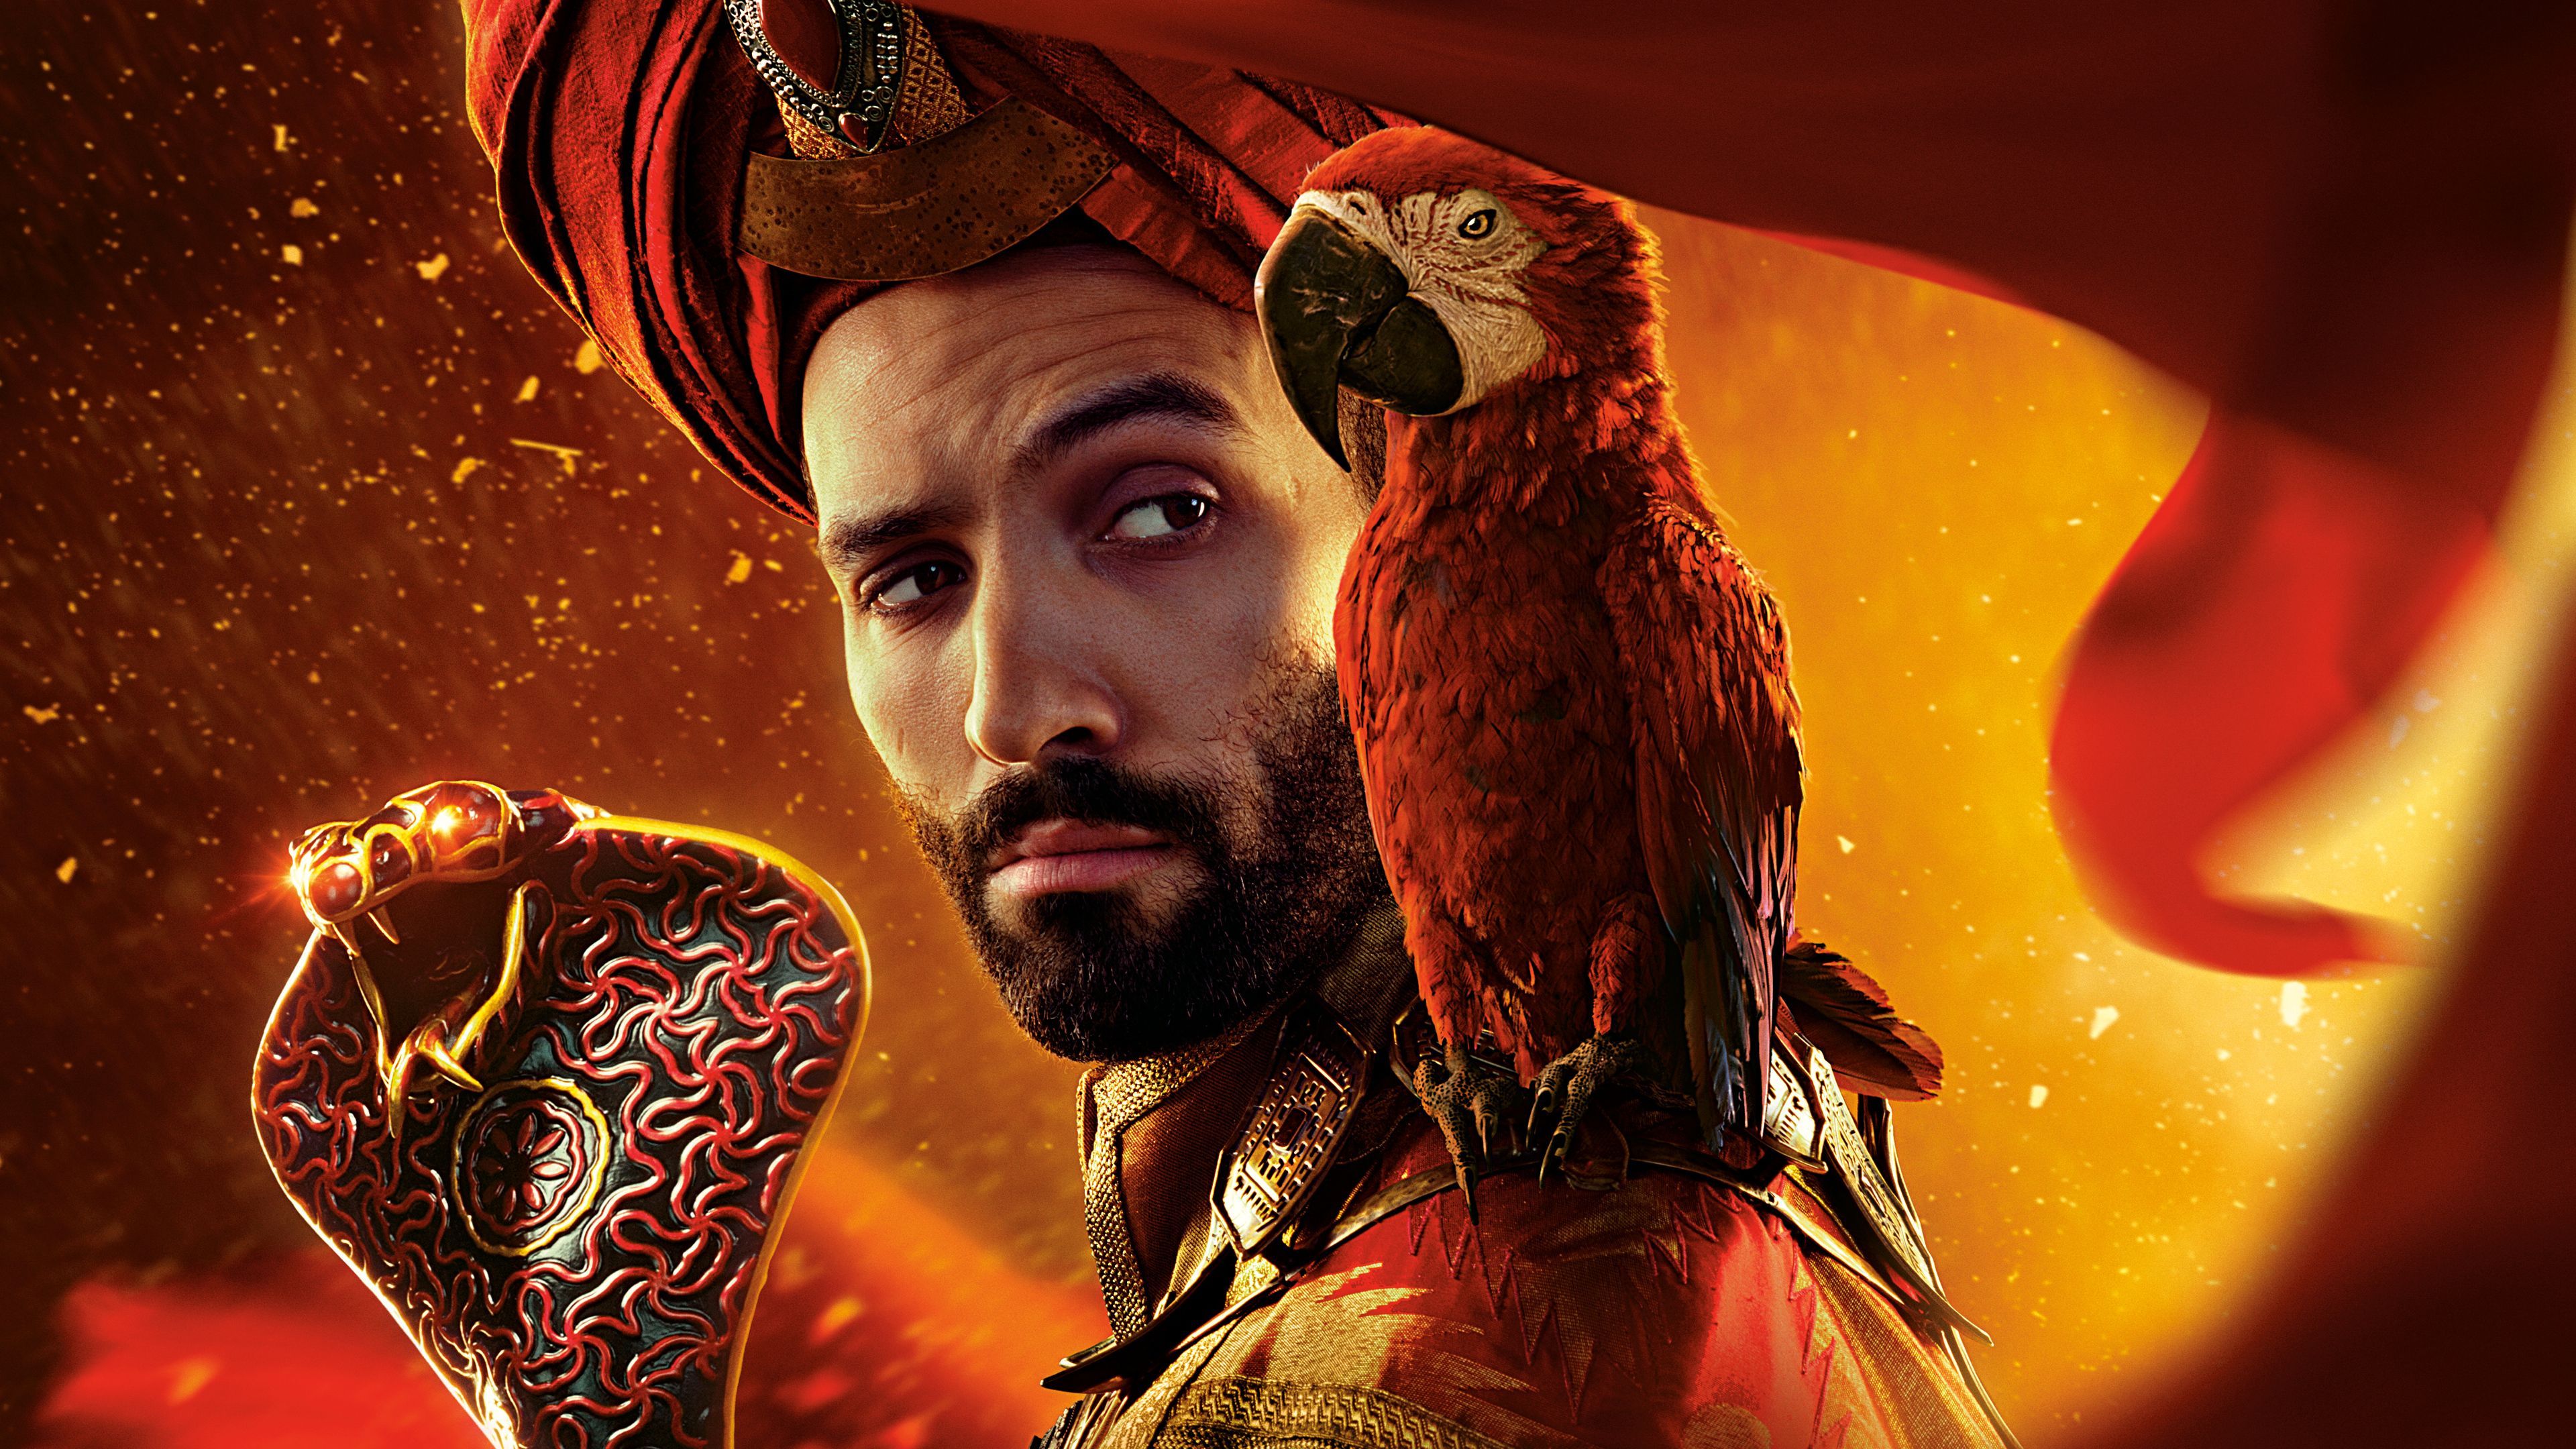 Wallpaper 4k Jafar In Aladdin 2019 4k 2019 movies wallpaper, 4k